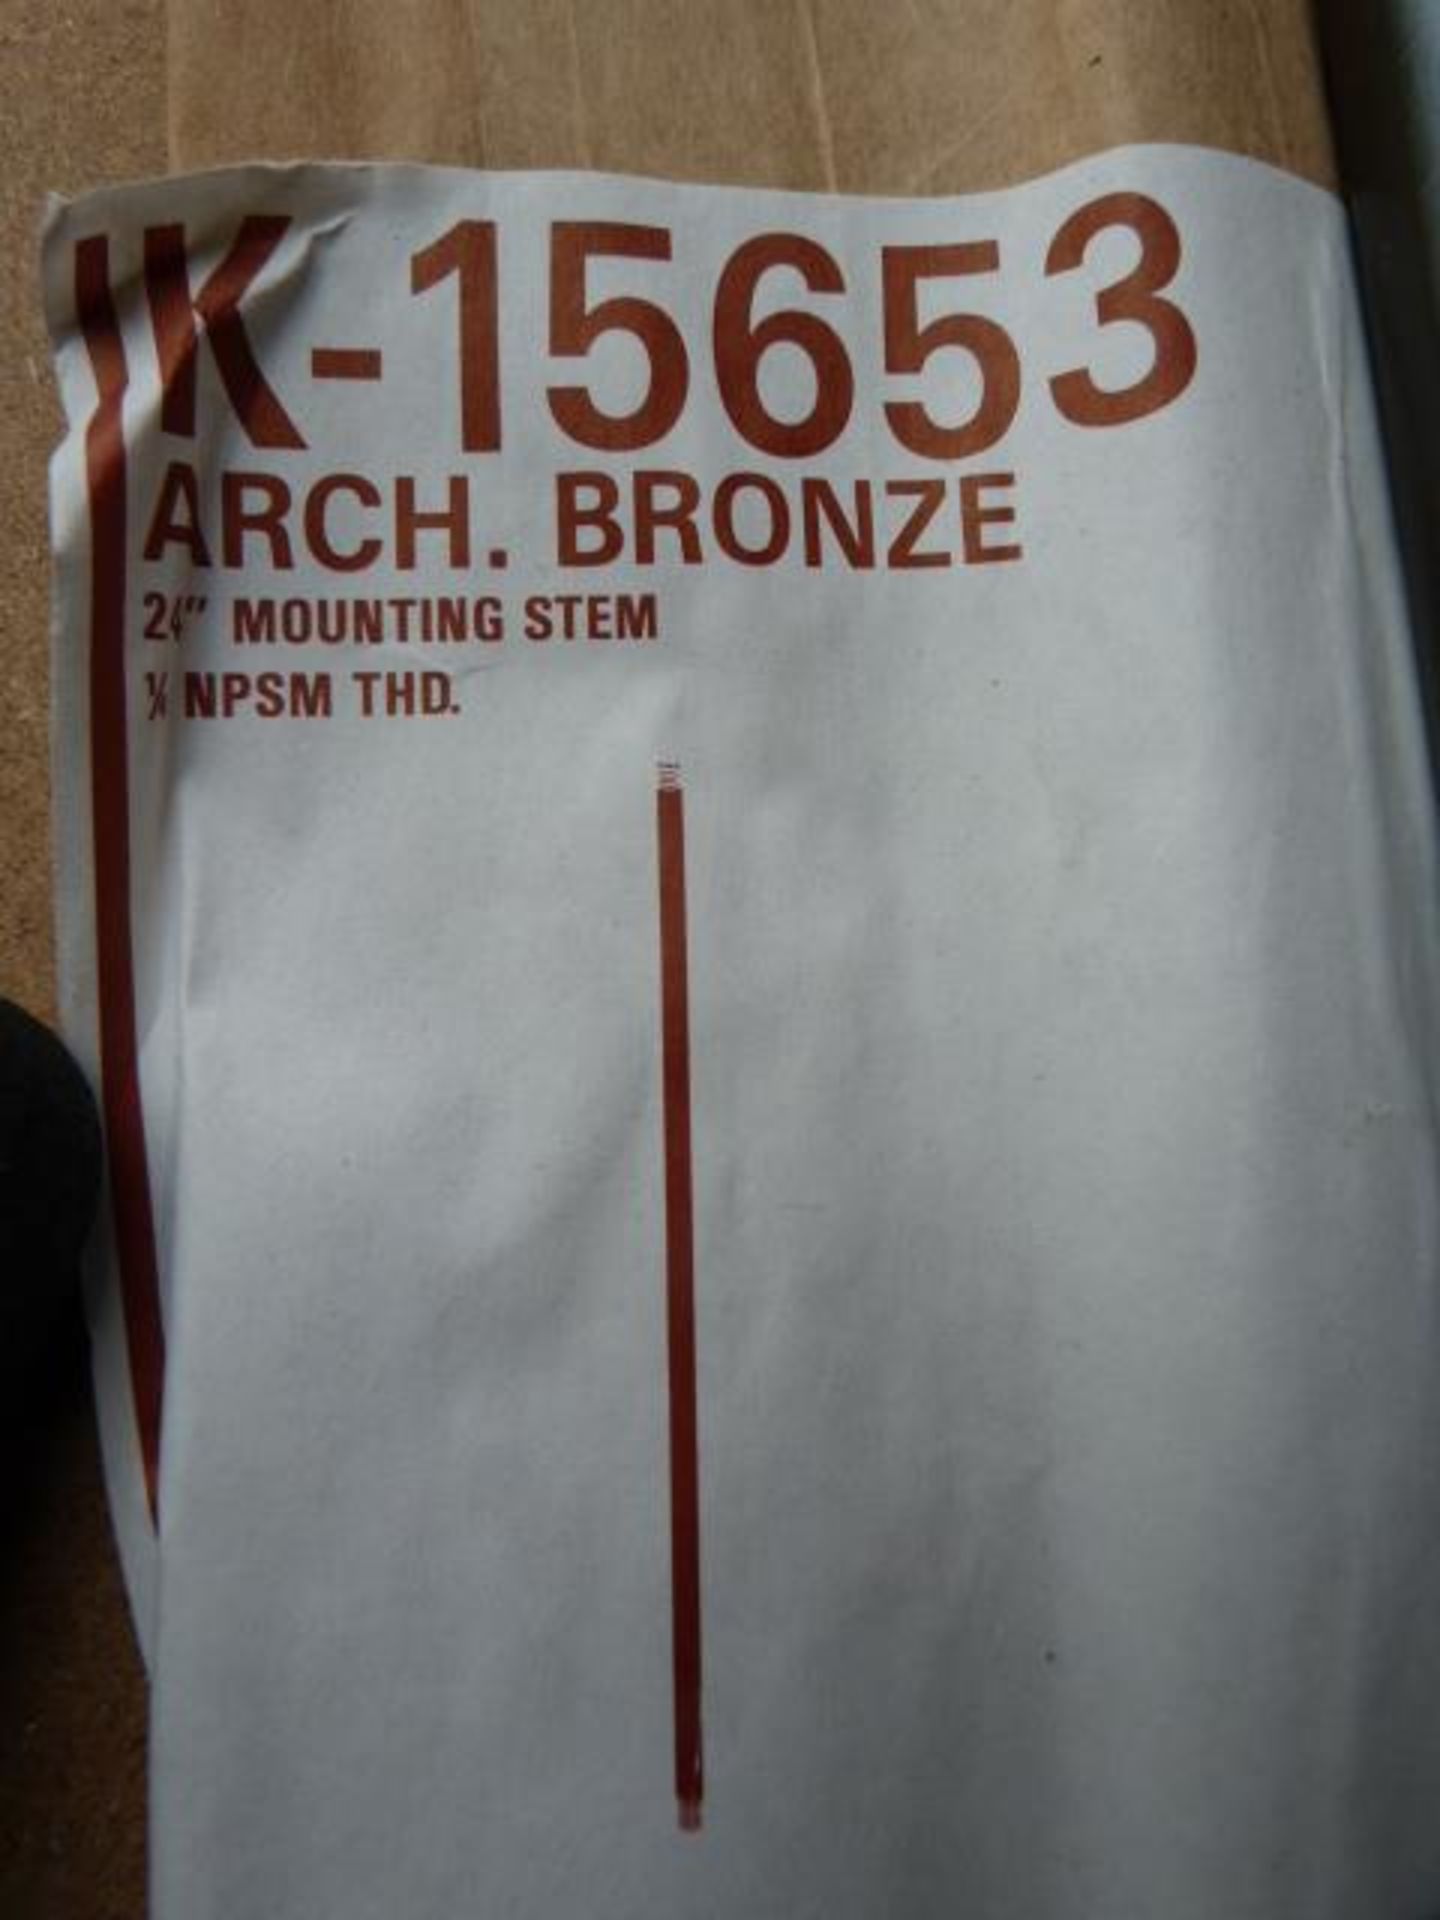 *K-15653 Arch Bronze 24" Mounting Stem